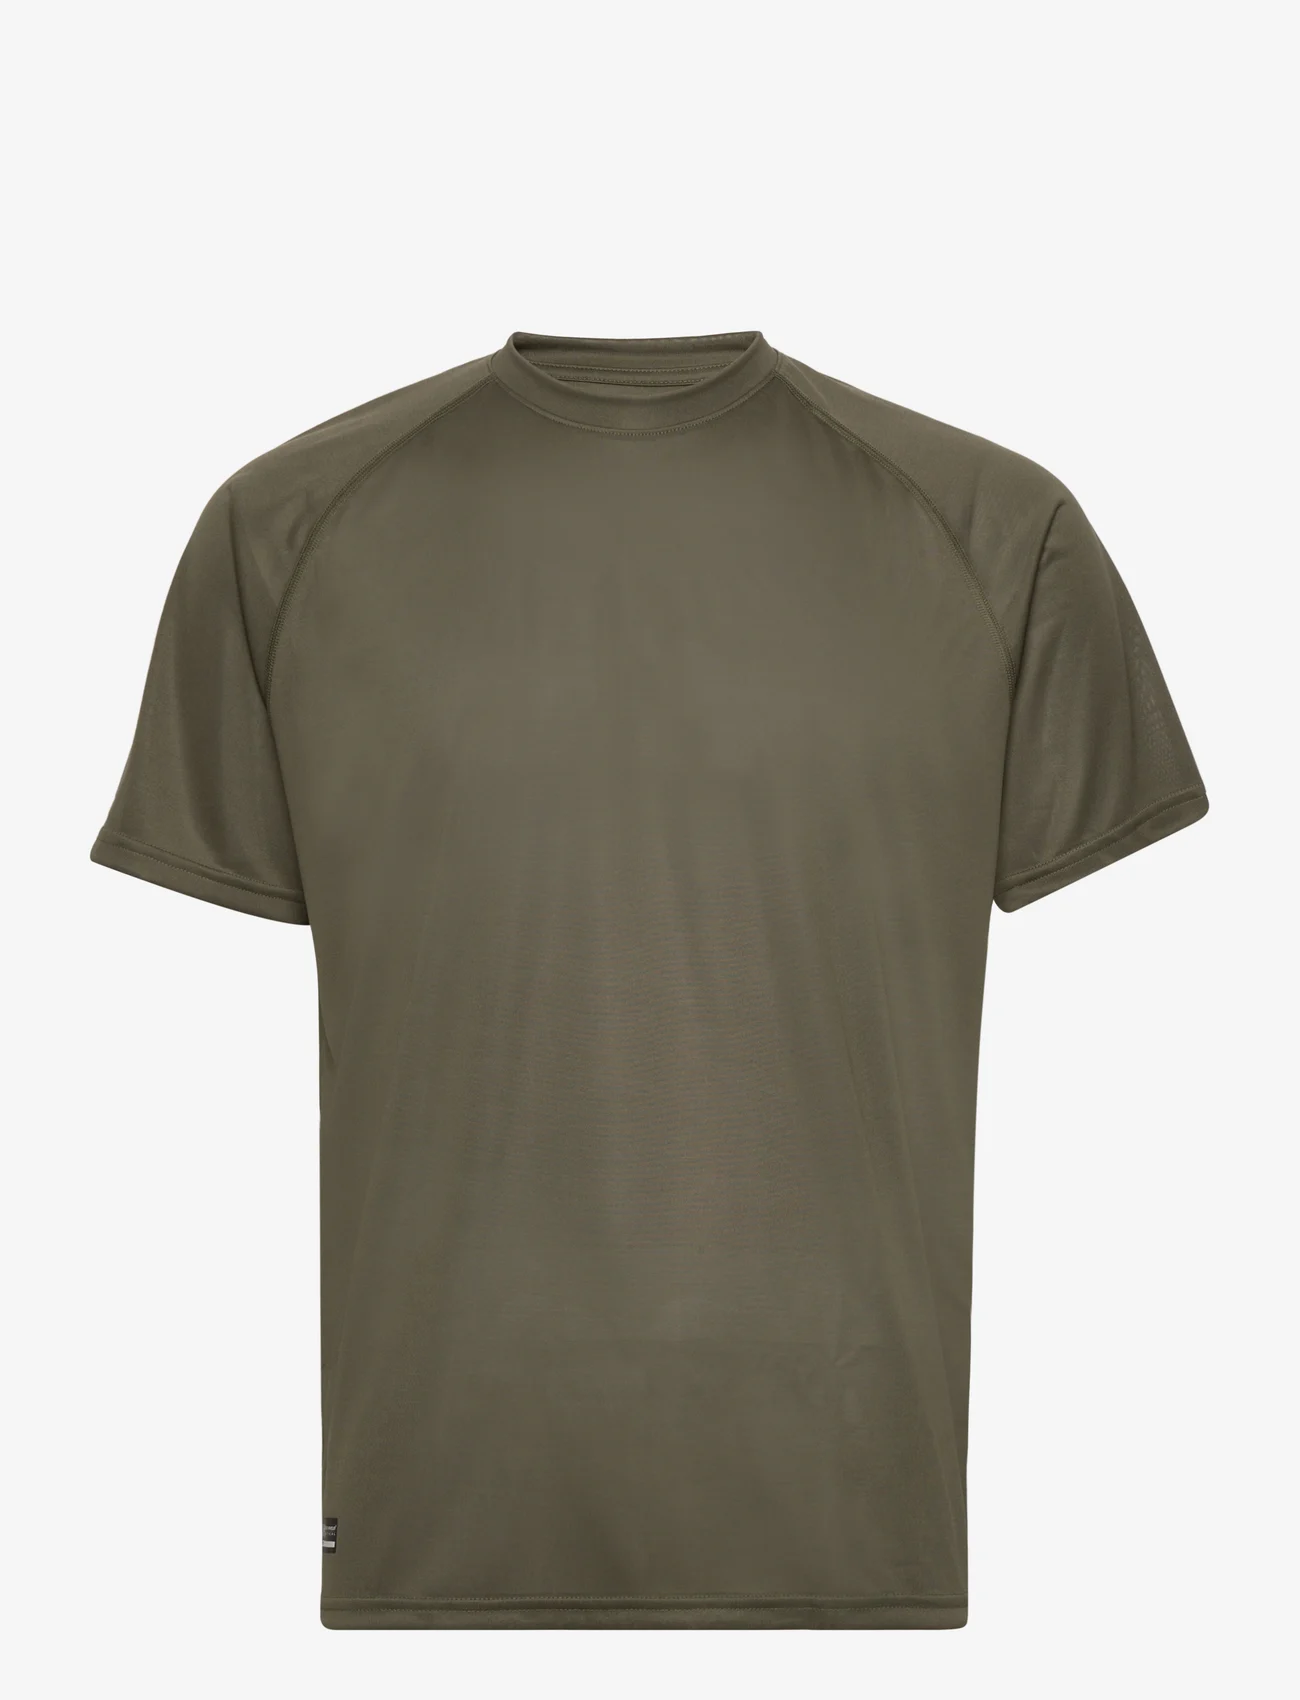 Under Armour - UA TAC Tech T - t-shirts - marine od green - 0